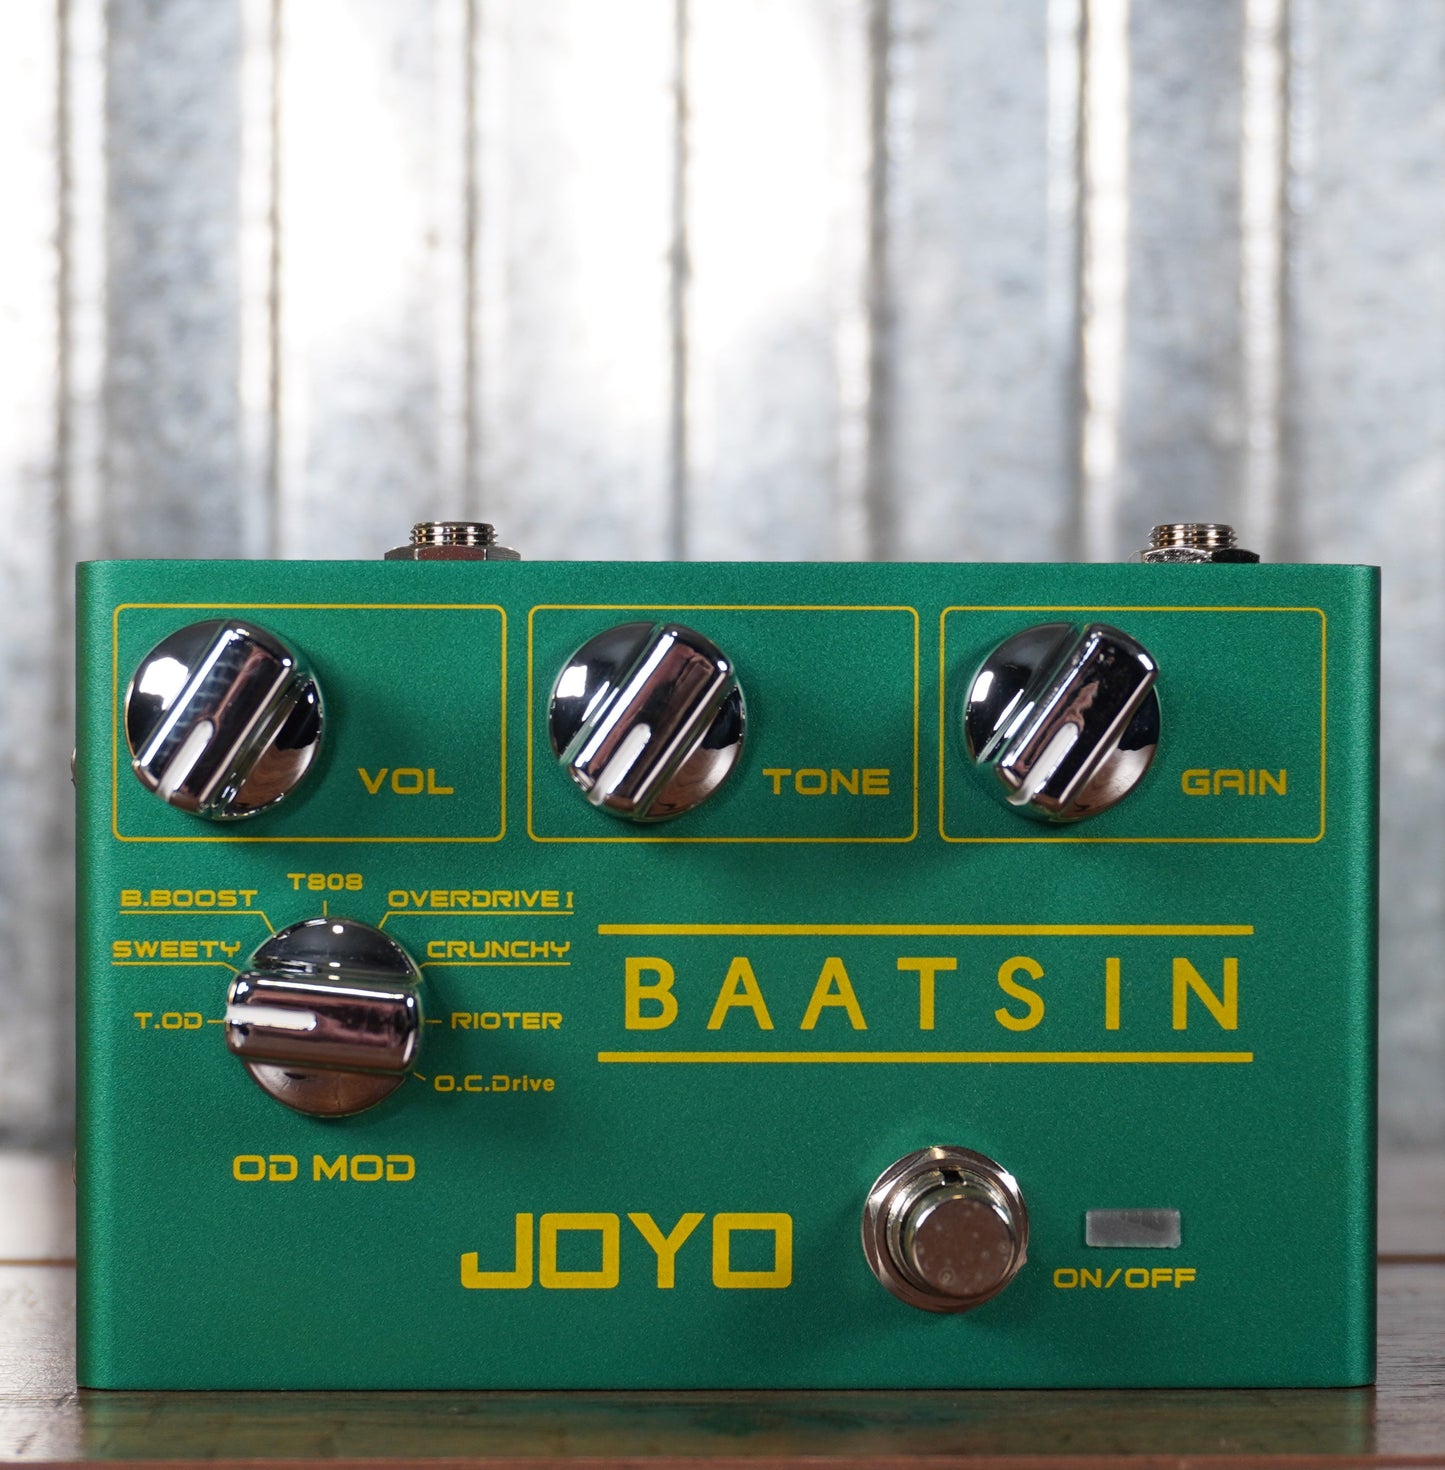 JOYO R-11 Baatsin Overdrive Distortion Guitar Effect Pedal